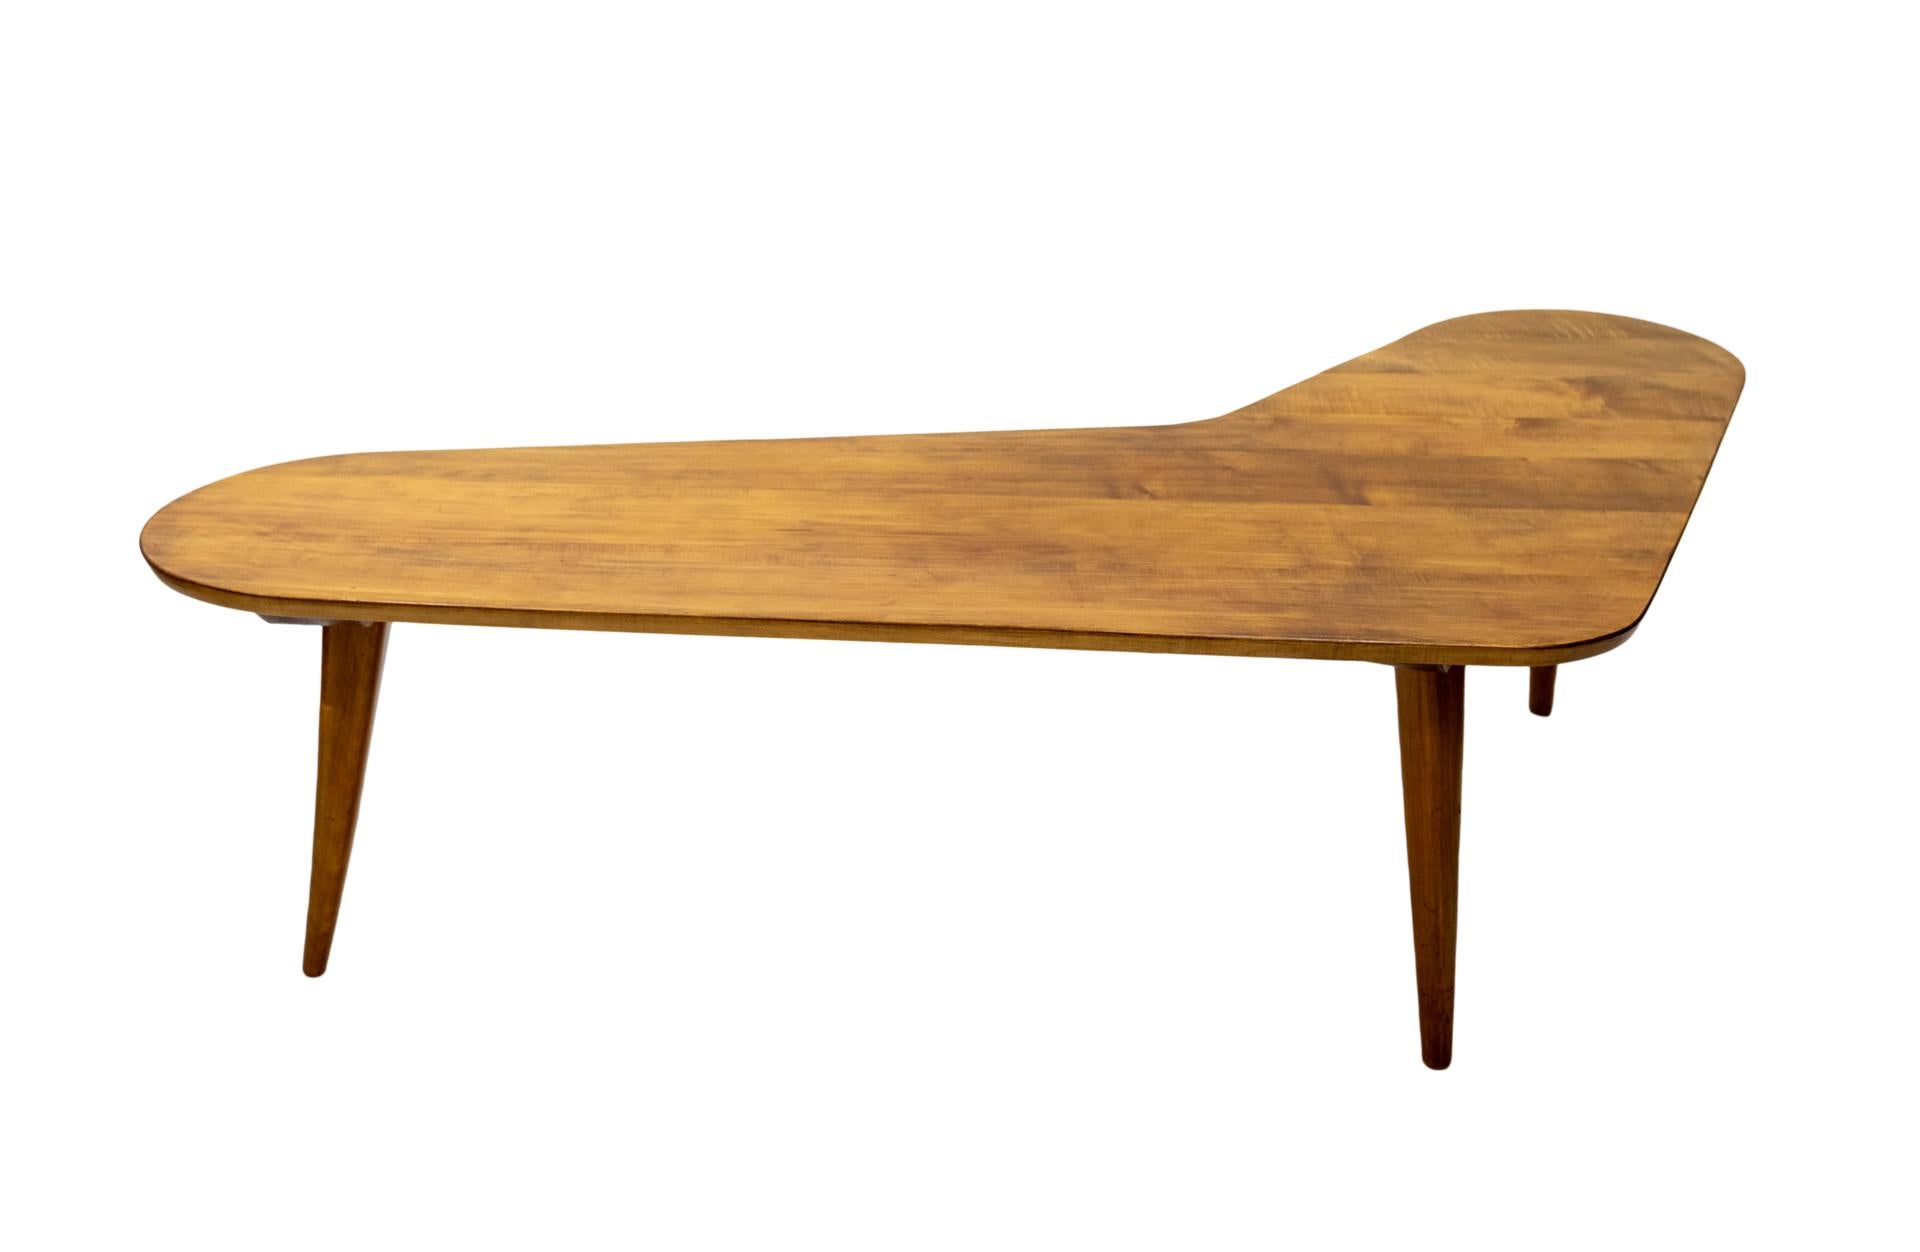 Beautiful organic boomerang shaped Dutch coffee table. Manufactured by Meubelfabriek Bovenkamp Holland 1950s tapered legs.
Nice and elegant coffee table. Elmwood.